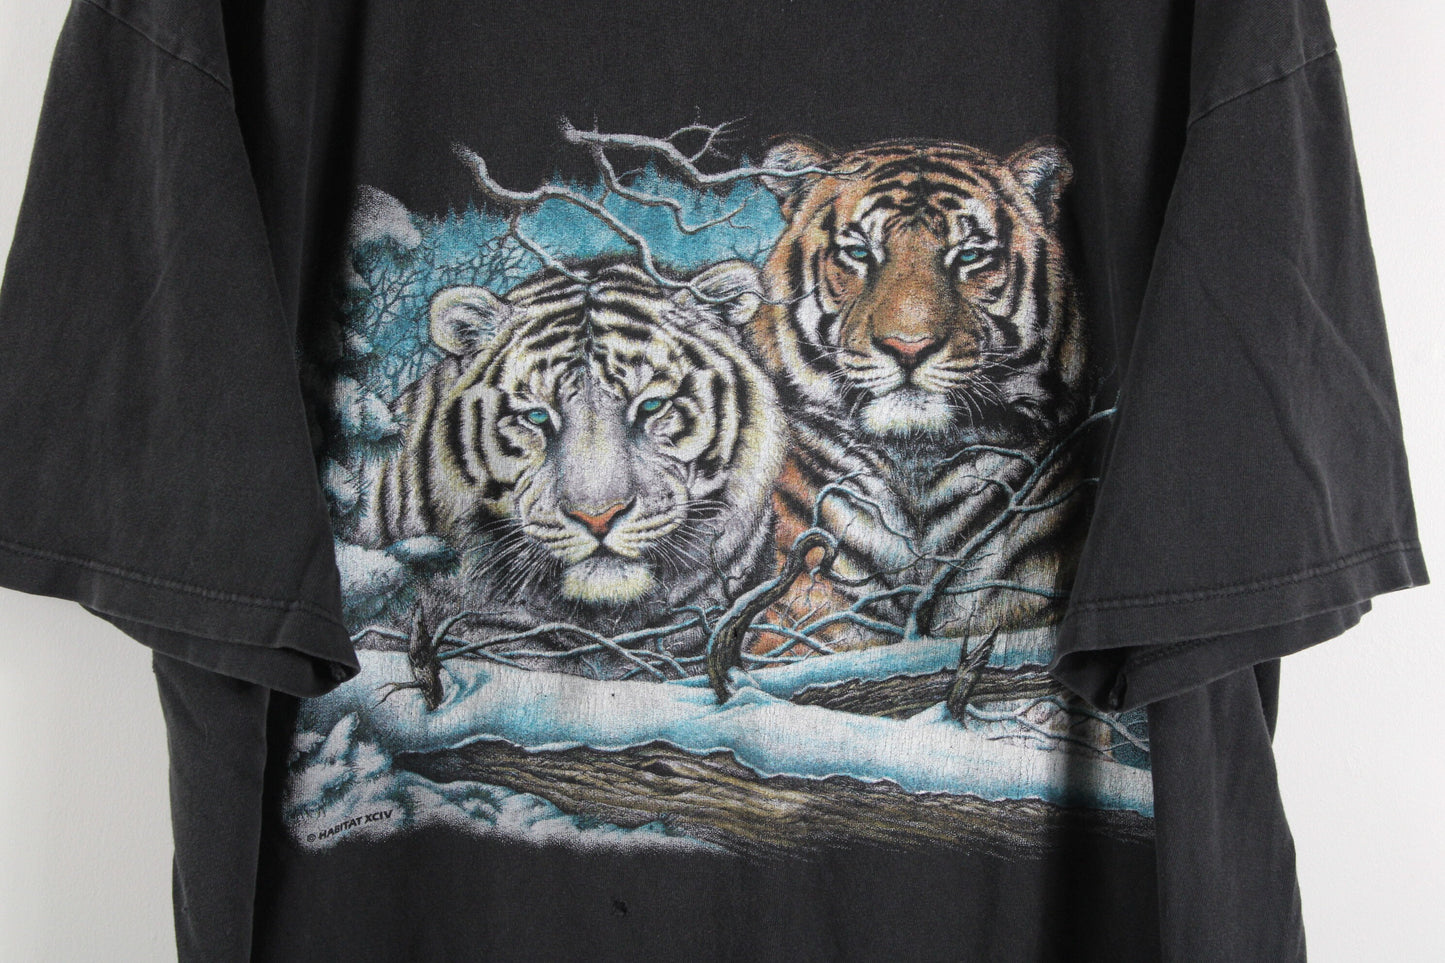 Animal T-Shirt / USA Souvenir T-Shirt / Lions And Tigers / Jungle Animal Tee / Vintage American Graphic Promo